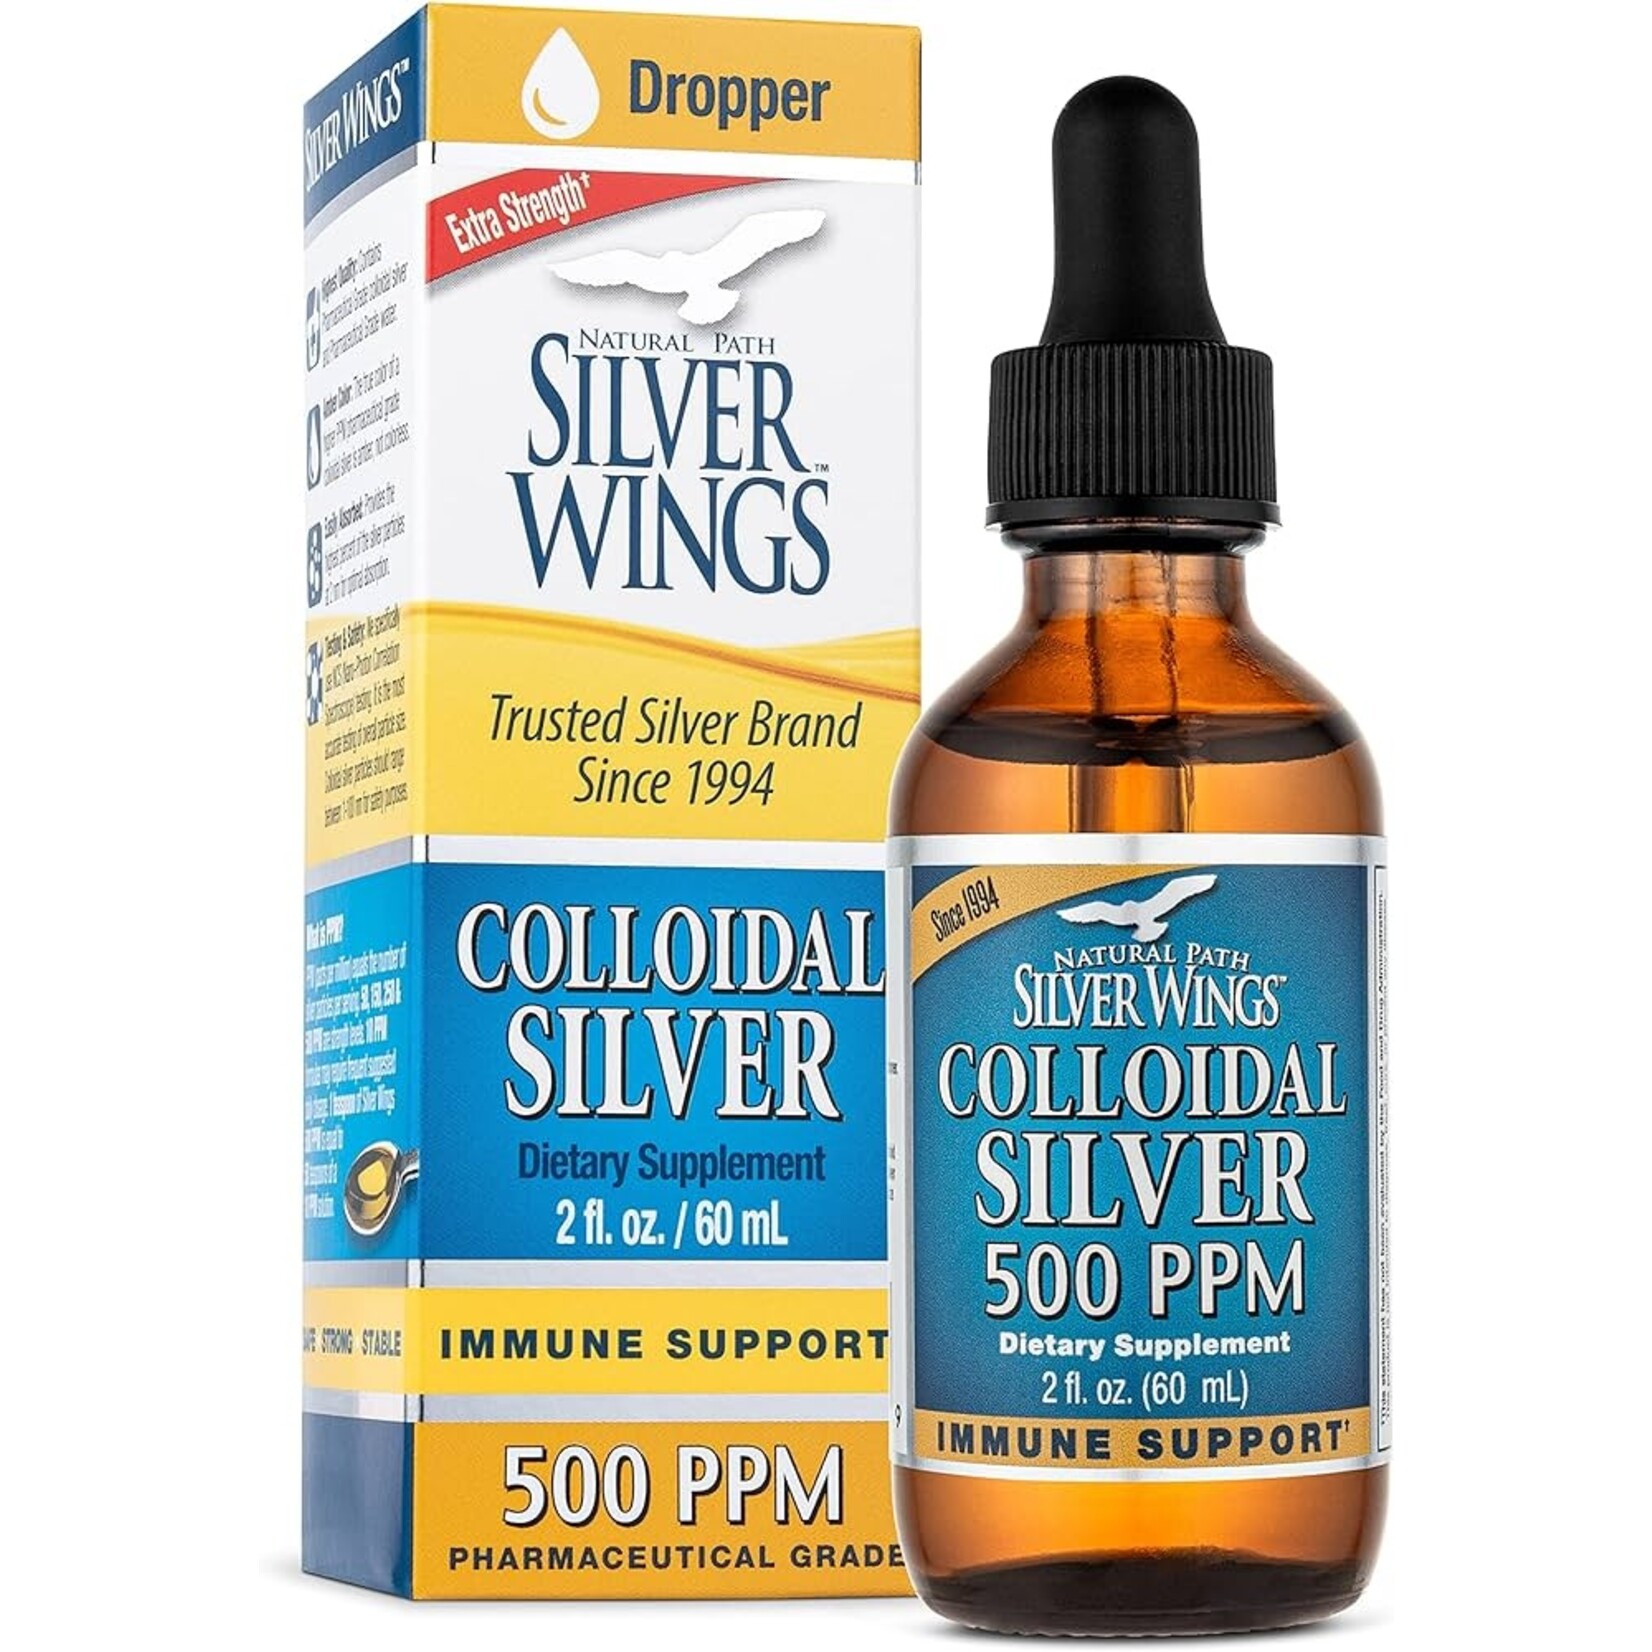 Natural path Colloidal Silver, 500ppm (Natural Path)